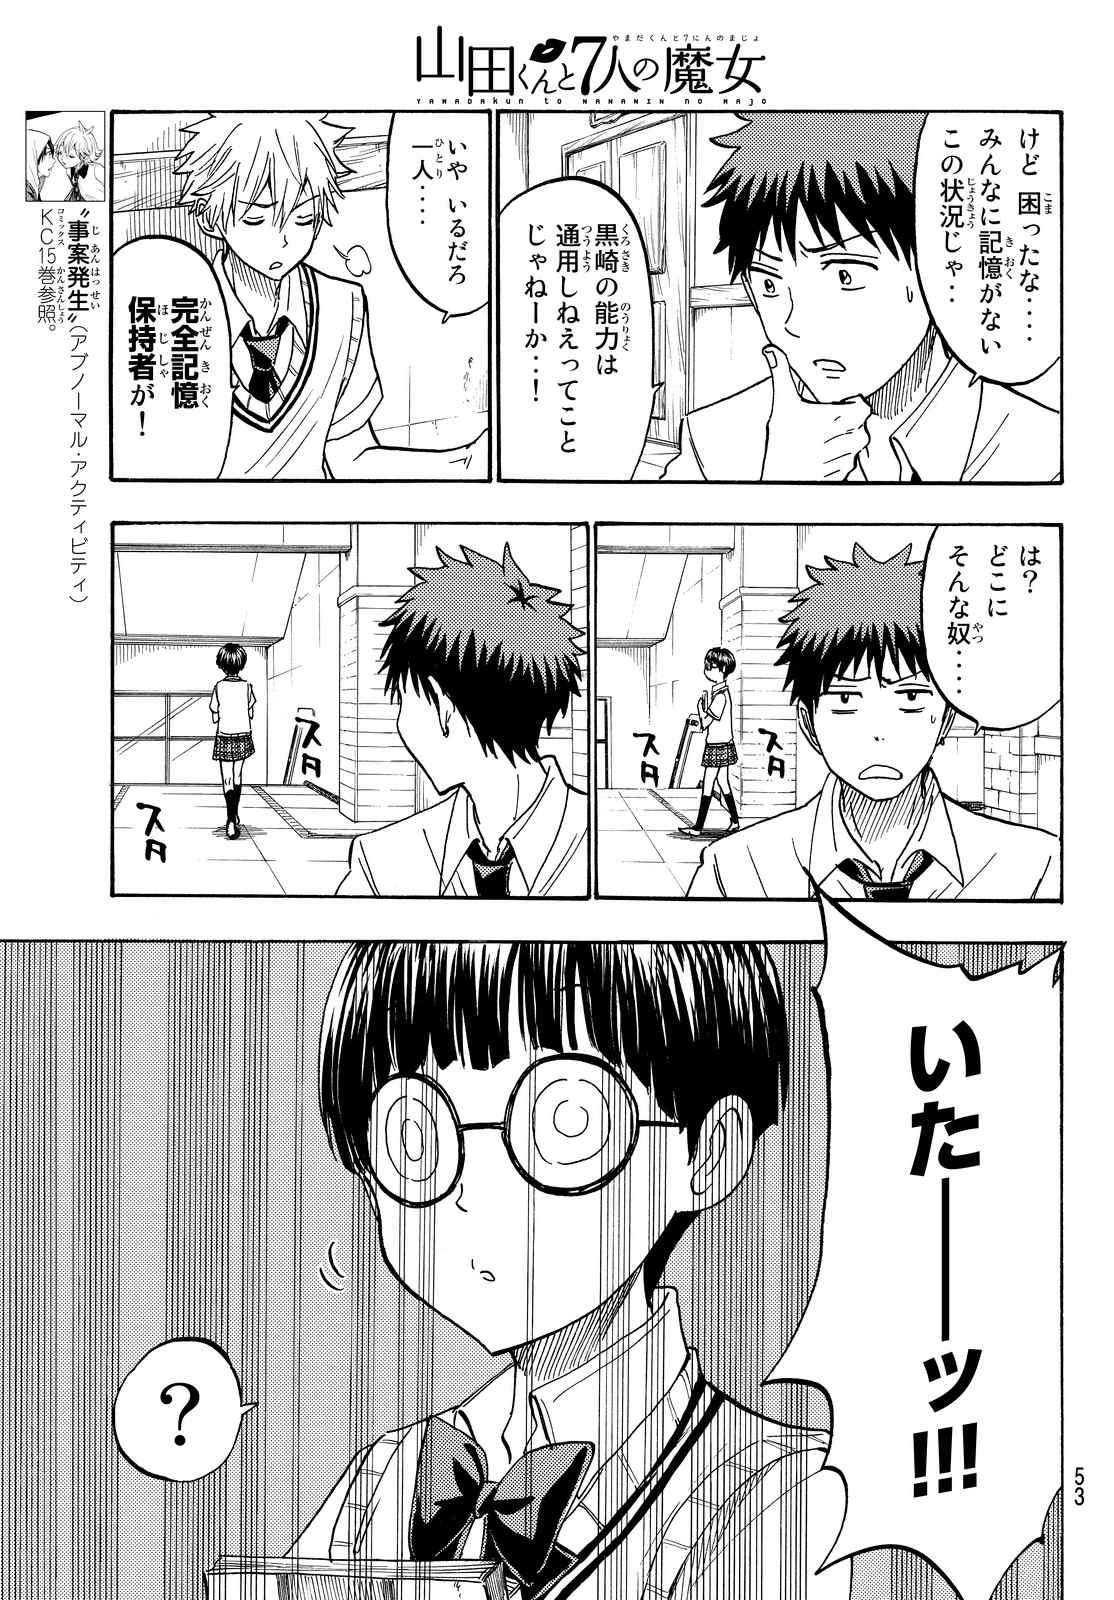 Yamada-kun to 7-nin no Majo - Chapter 211 - Page 7